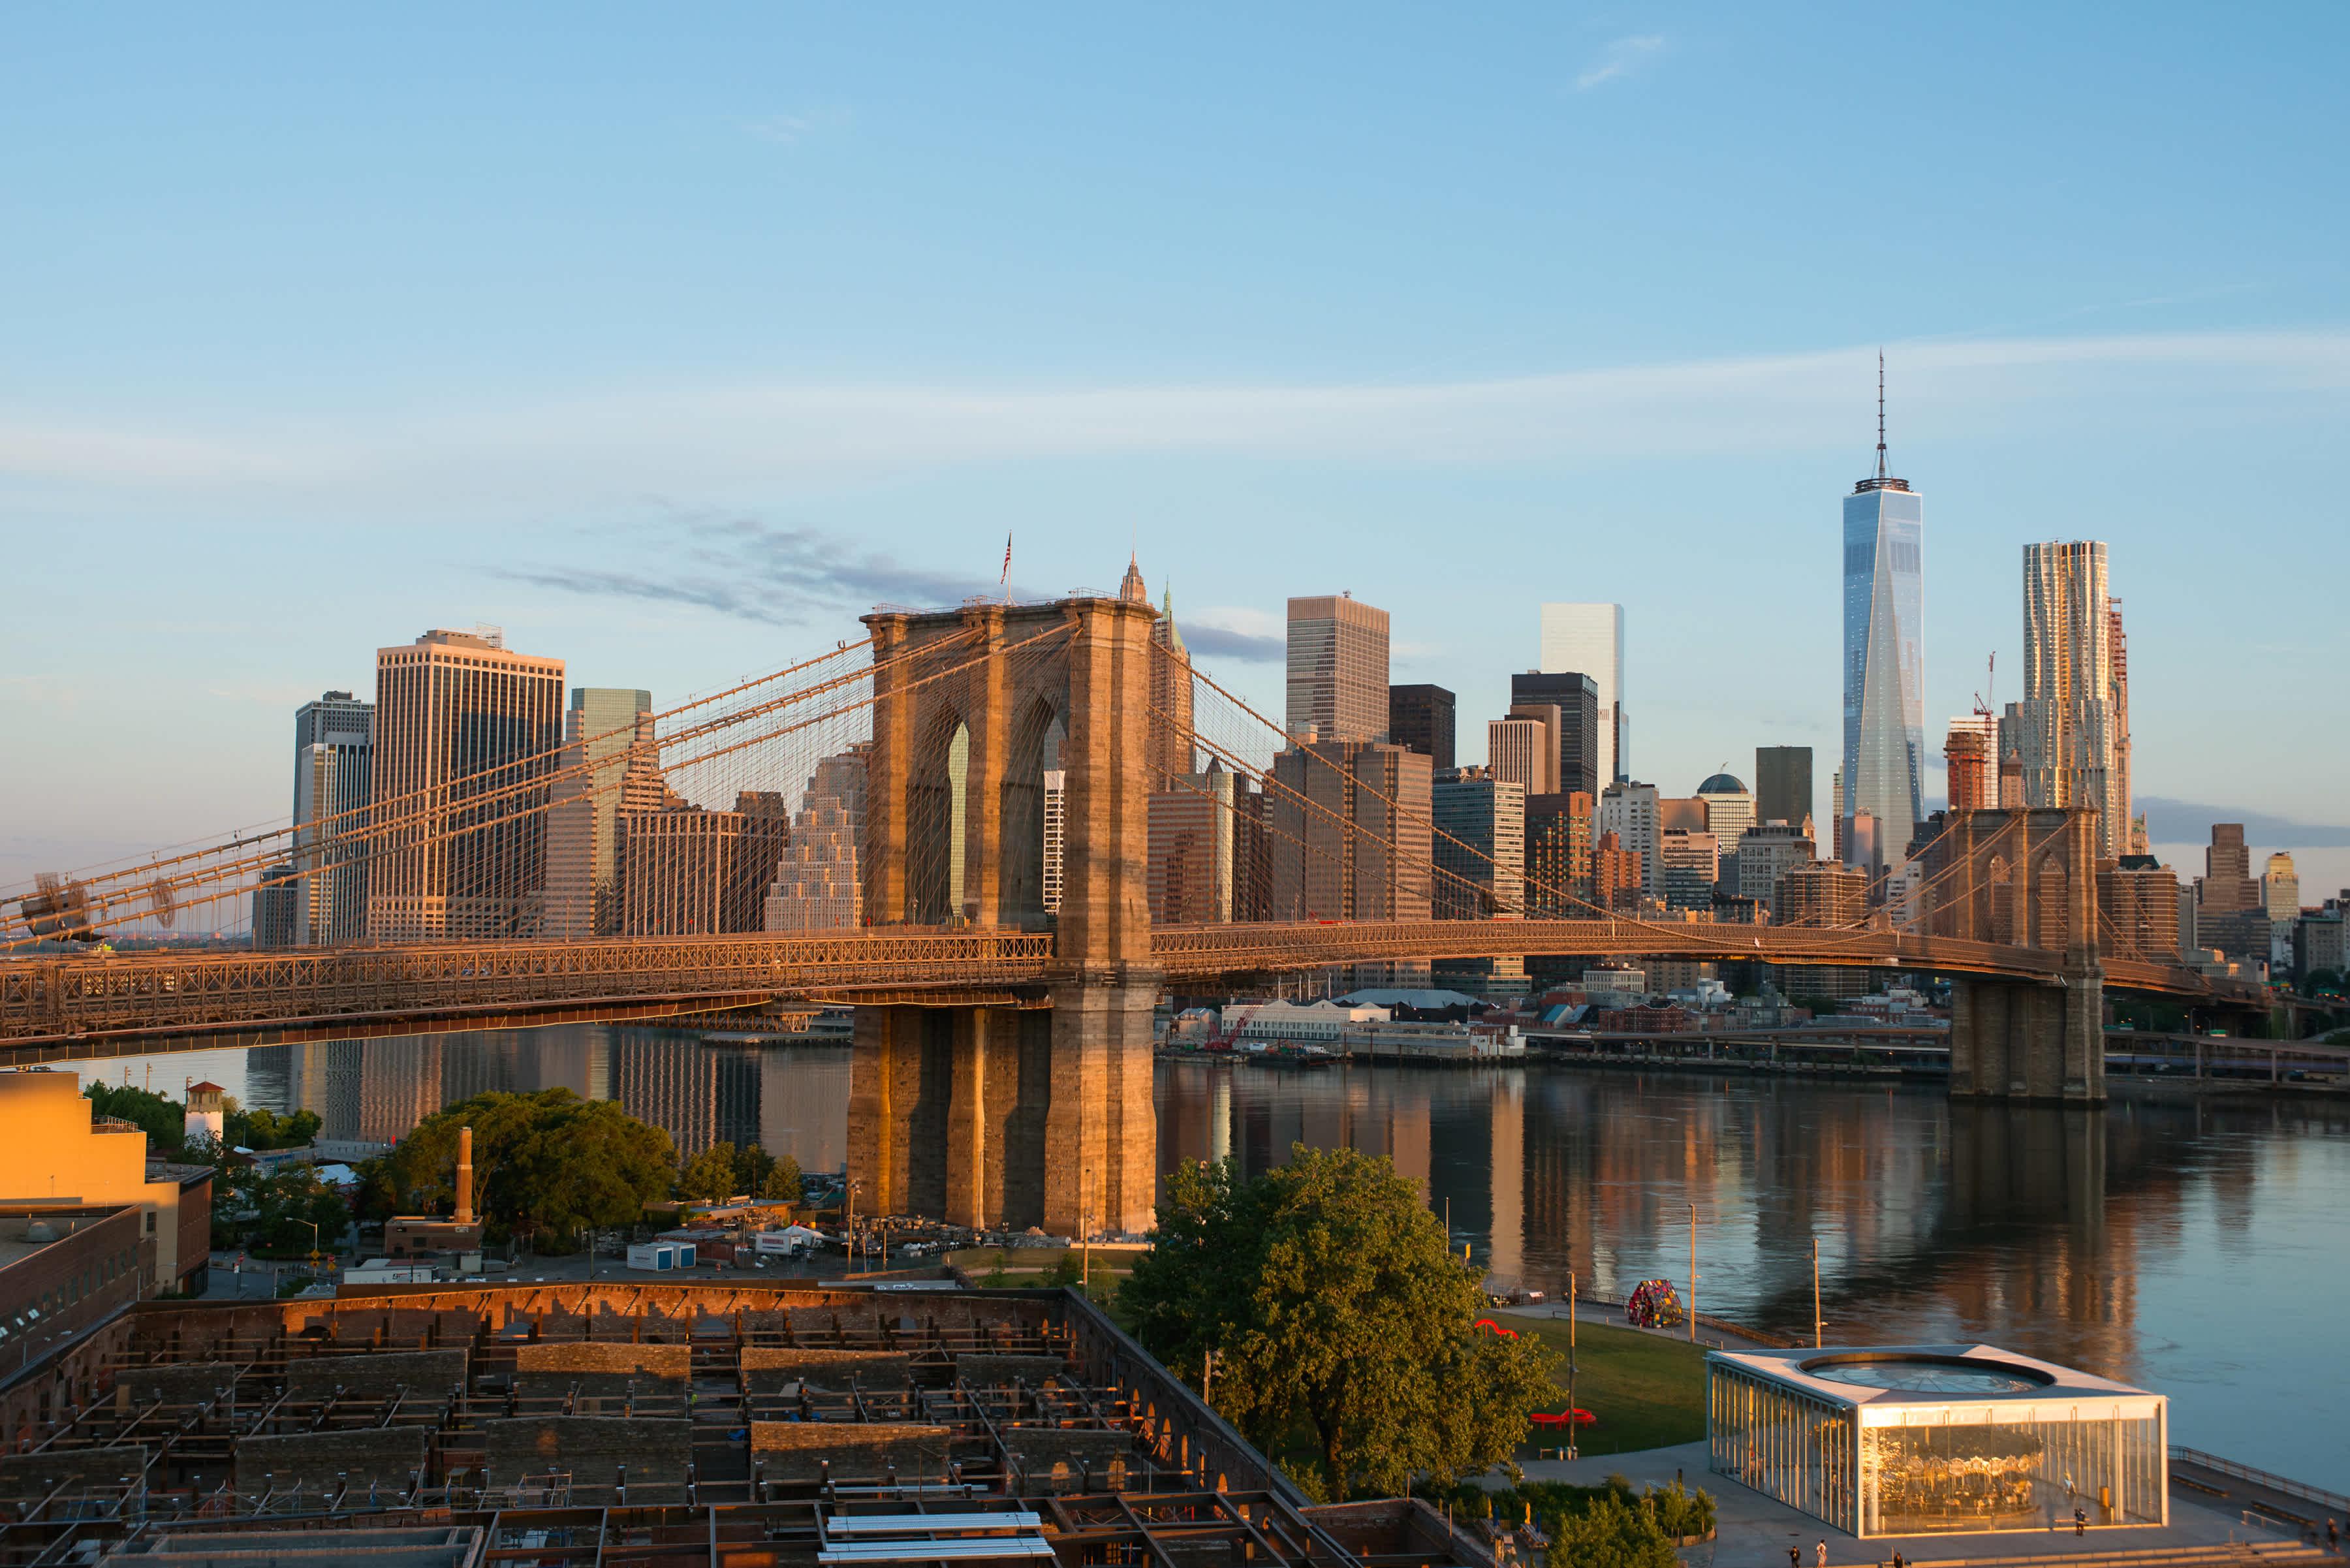 The Brooklyn Bridge defines the NYC skyline